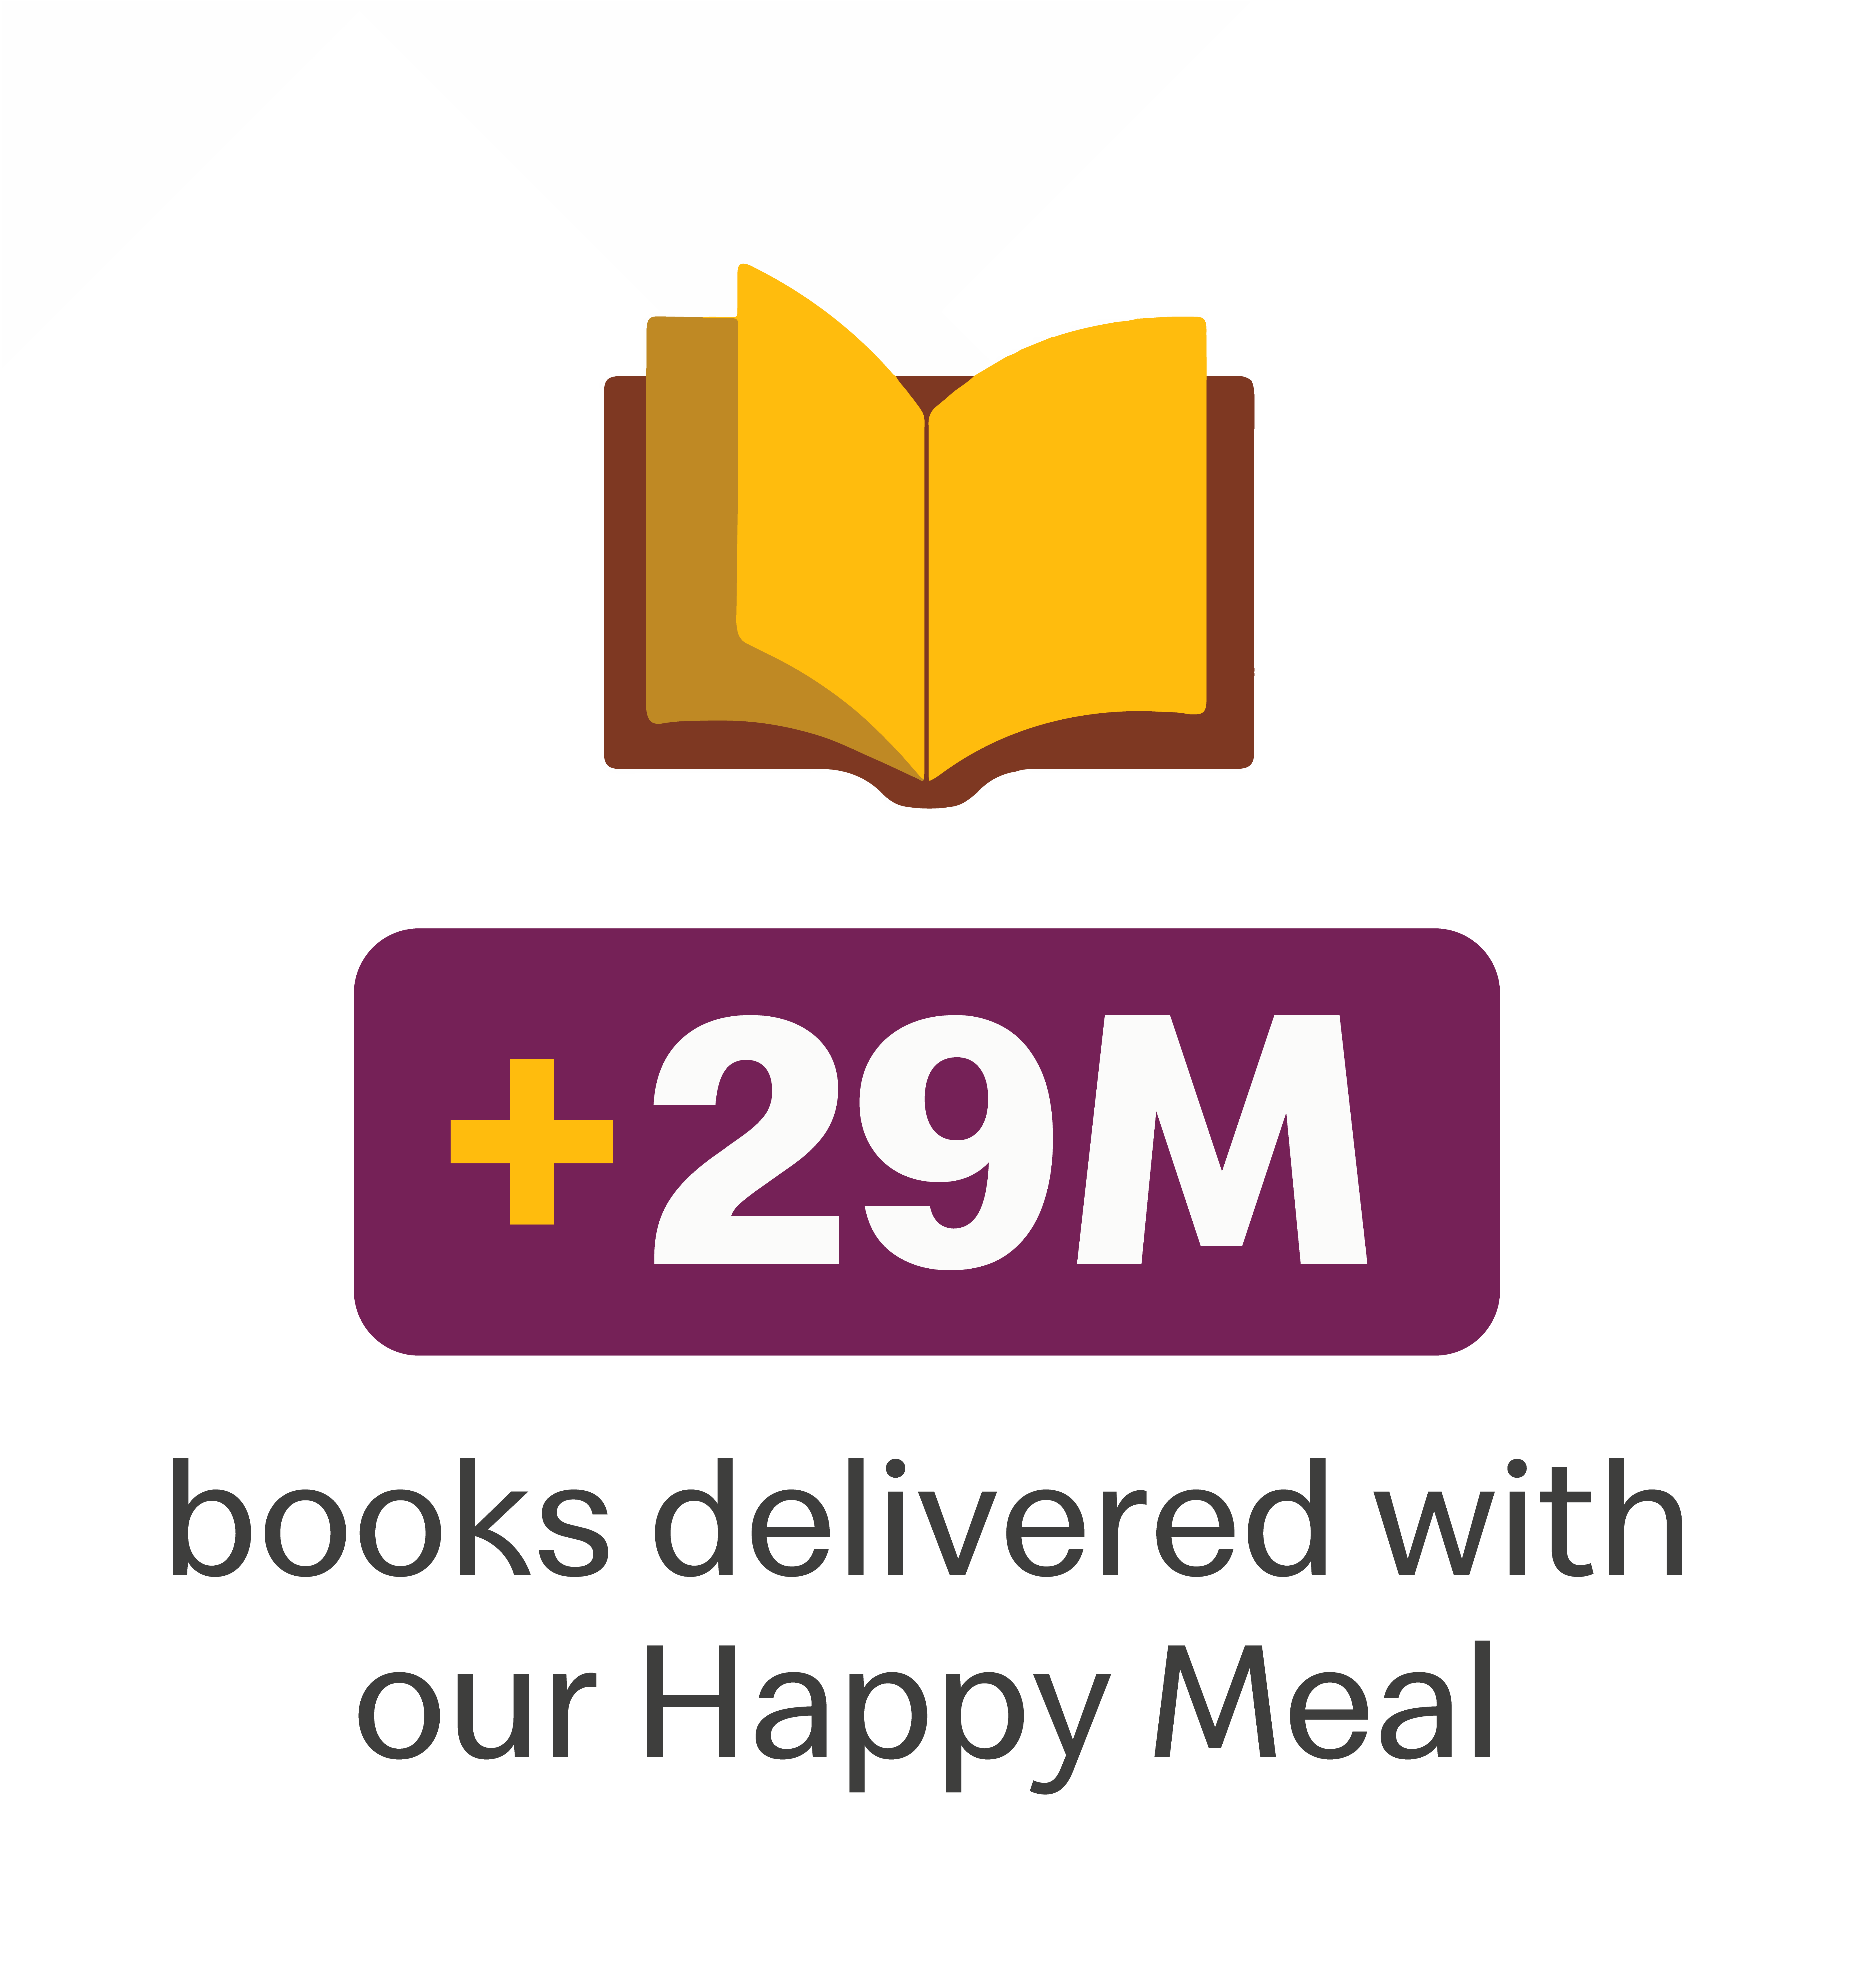 +29M books delivered